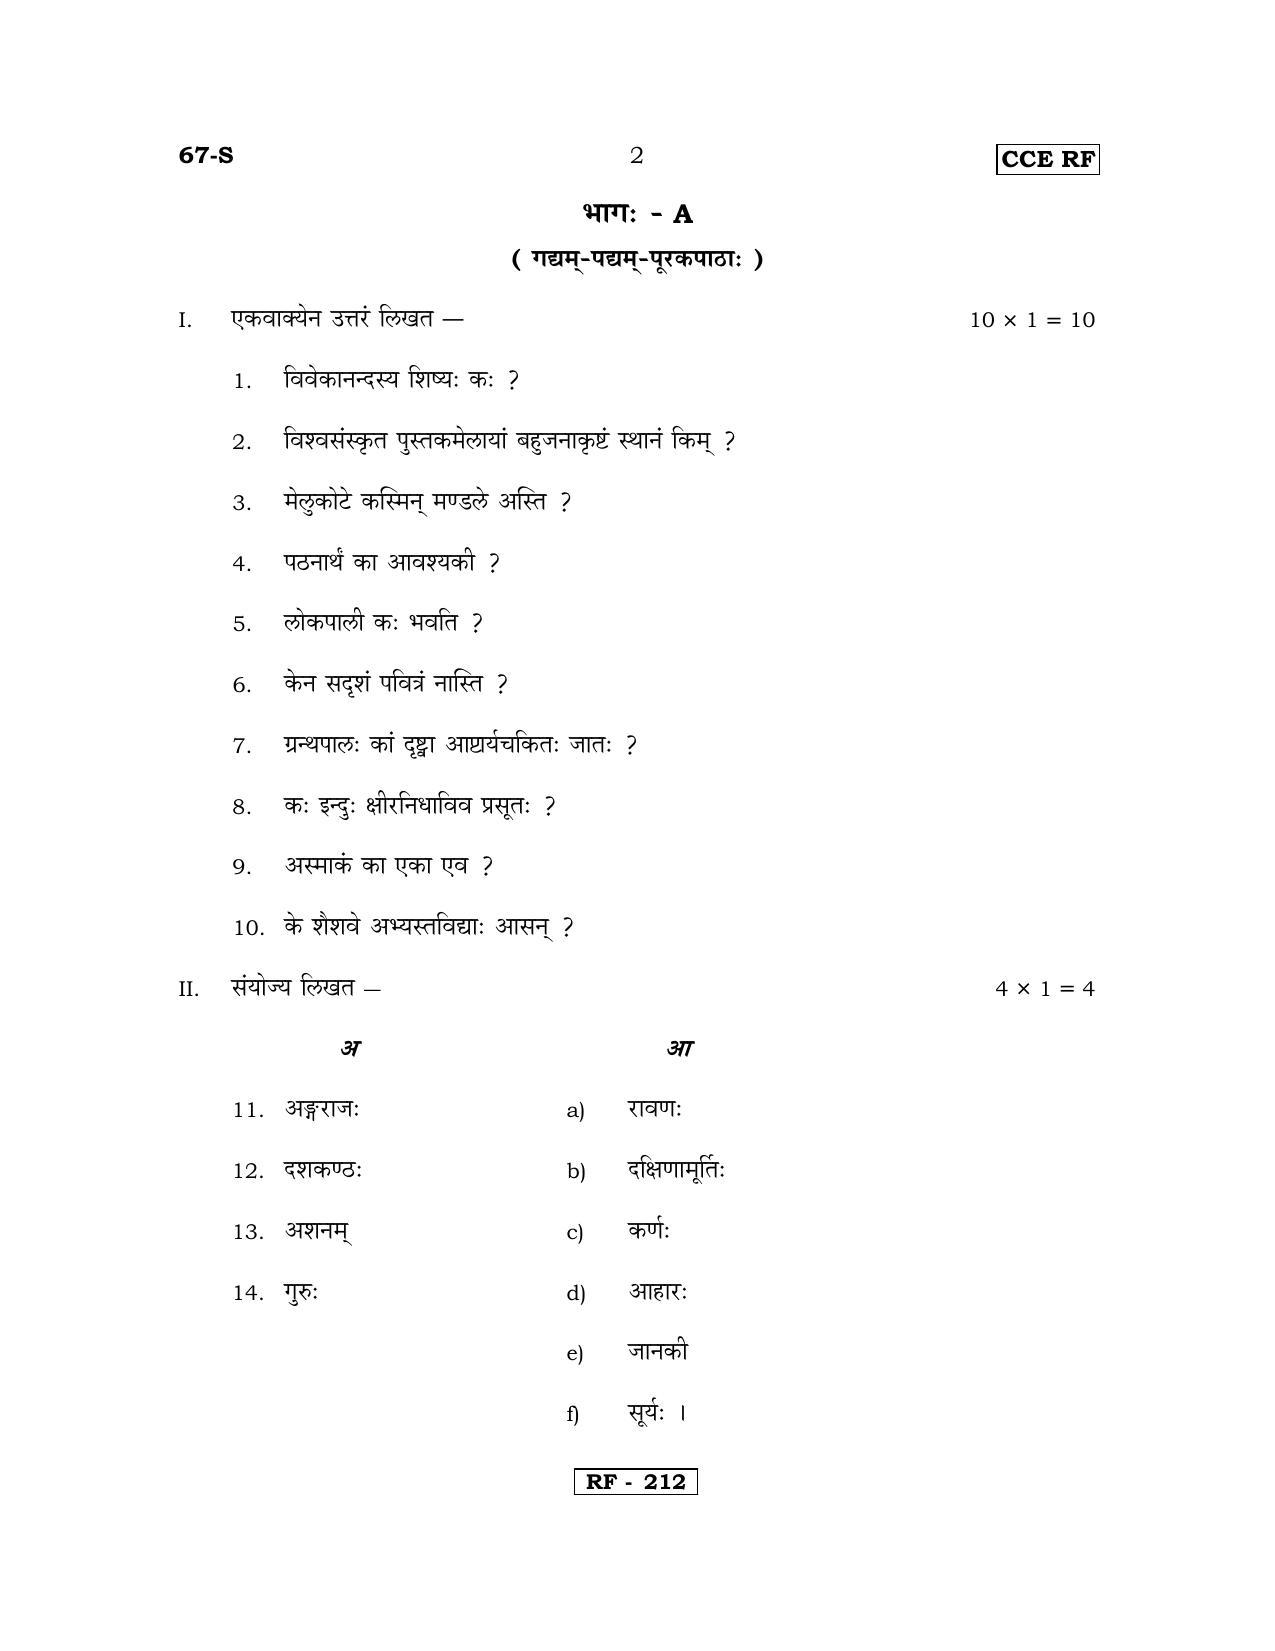 Karnataka SSLC Sanskrit - Third Language - SANSKRIT (67-S-CCE RF REVISED_39) April 2018 Question Paper - Page 2